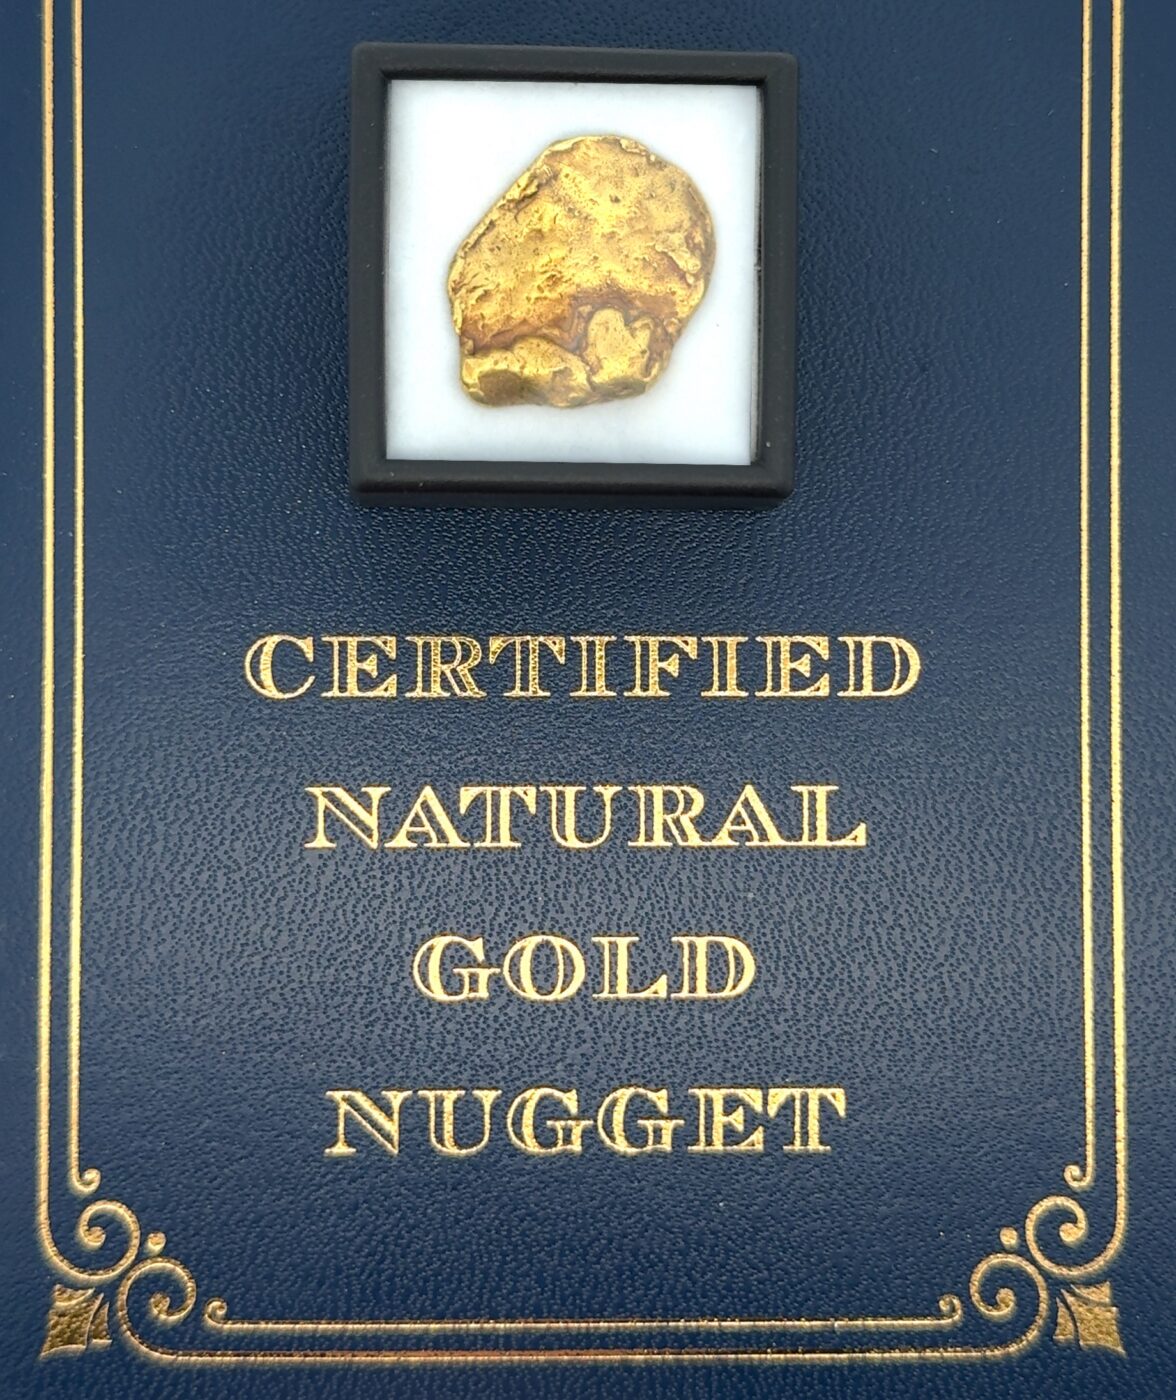 8.9 Gram Natural Gold Nugget from Chicken, Alaska, Alaska Mint